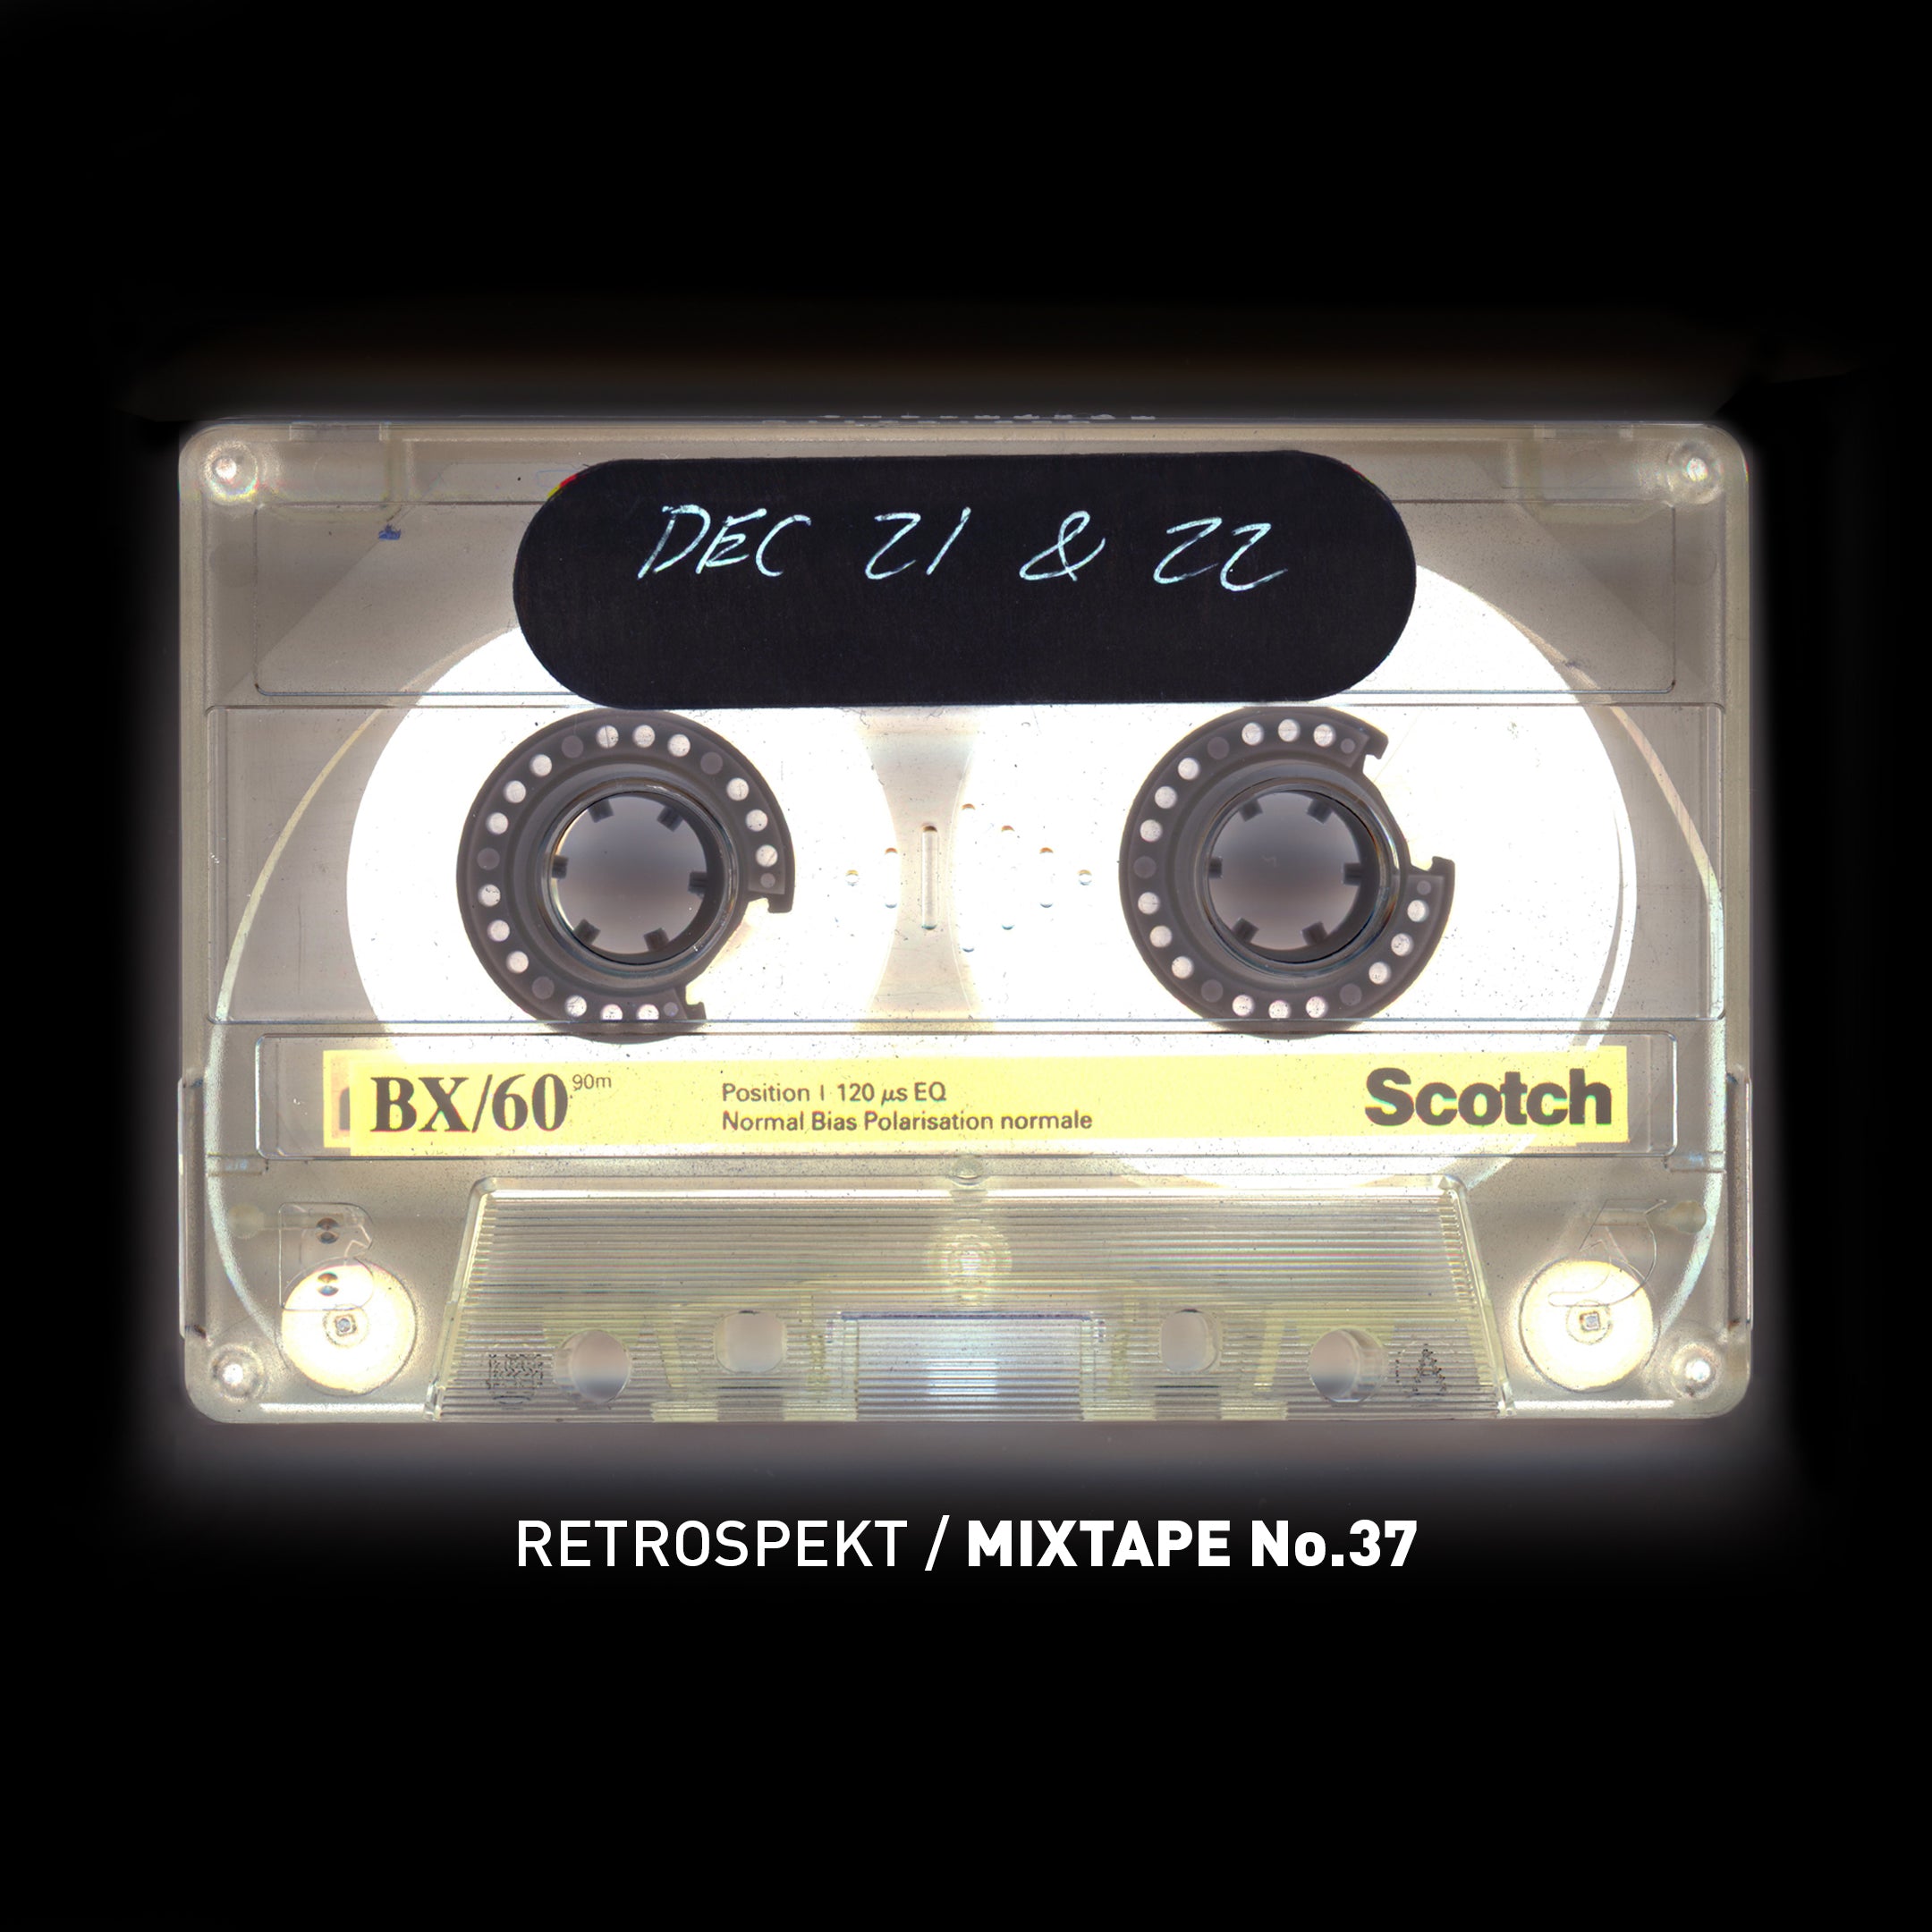 Retrospekt Mixtape No. 37